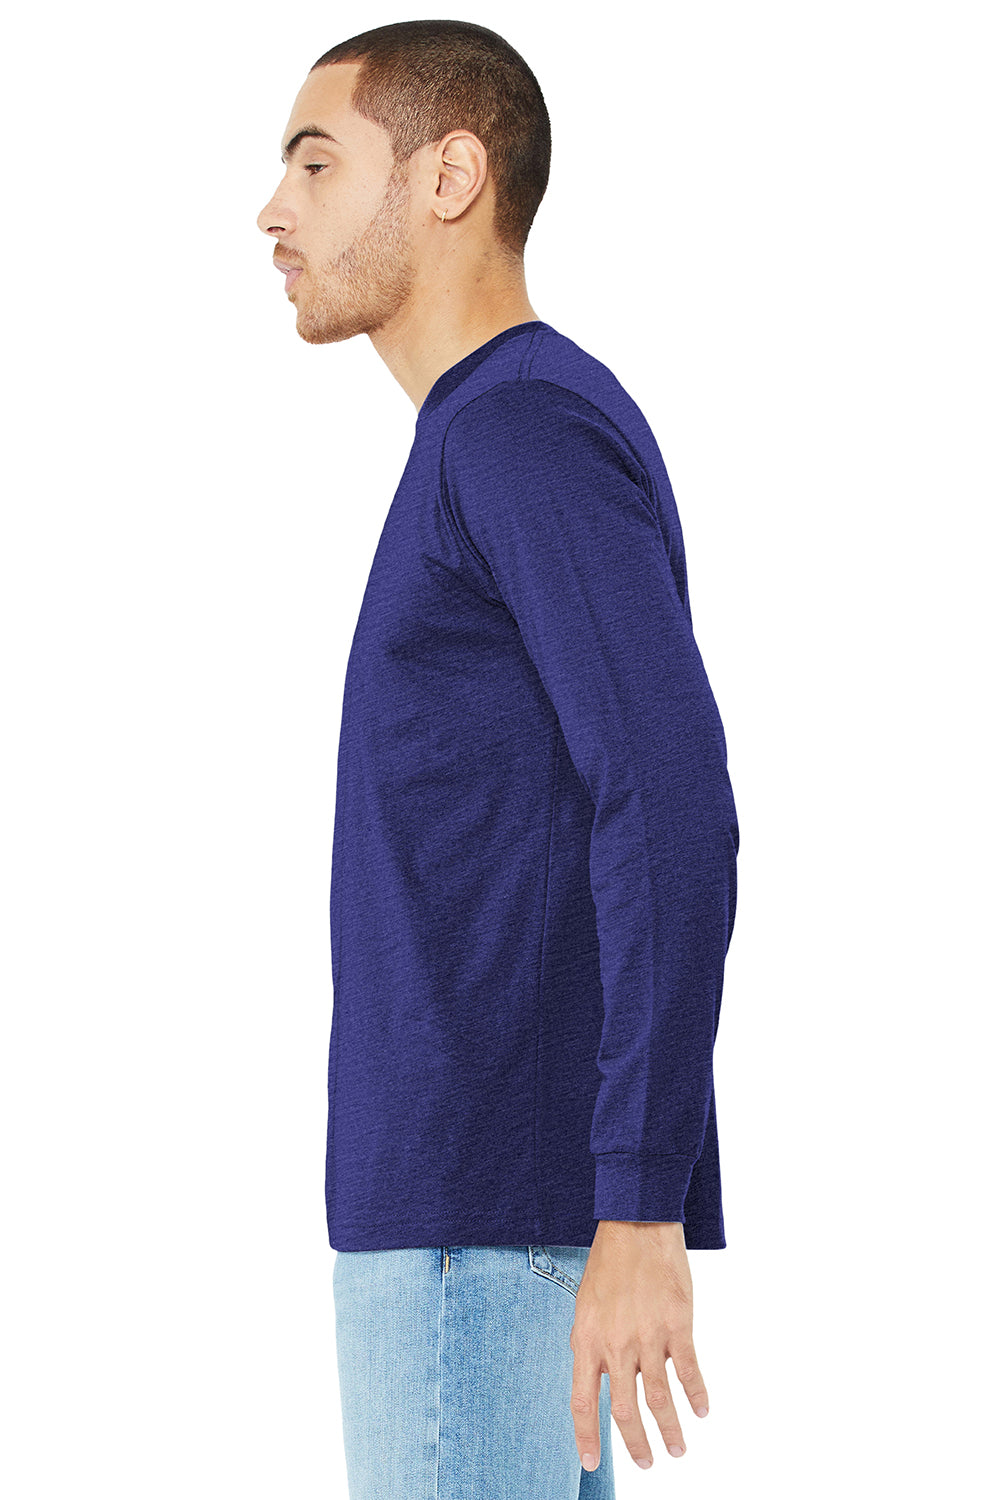 Bella + Canvas BC3501/3501 Mens Jersey Long Sleeve Crewneck T-Shirt Navy Blue Triblend Model Side